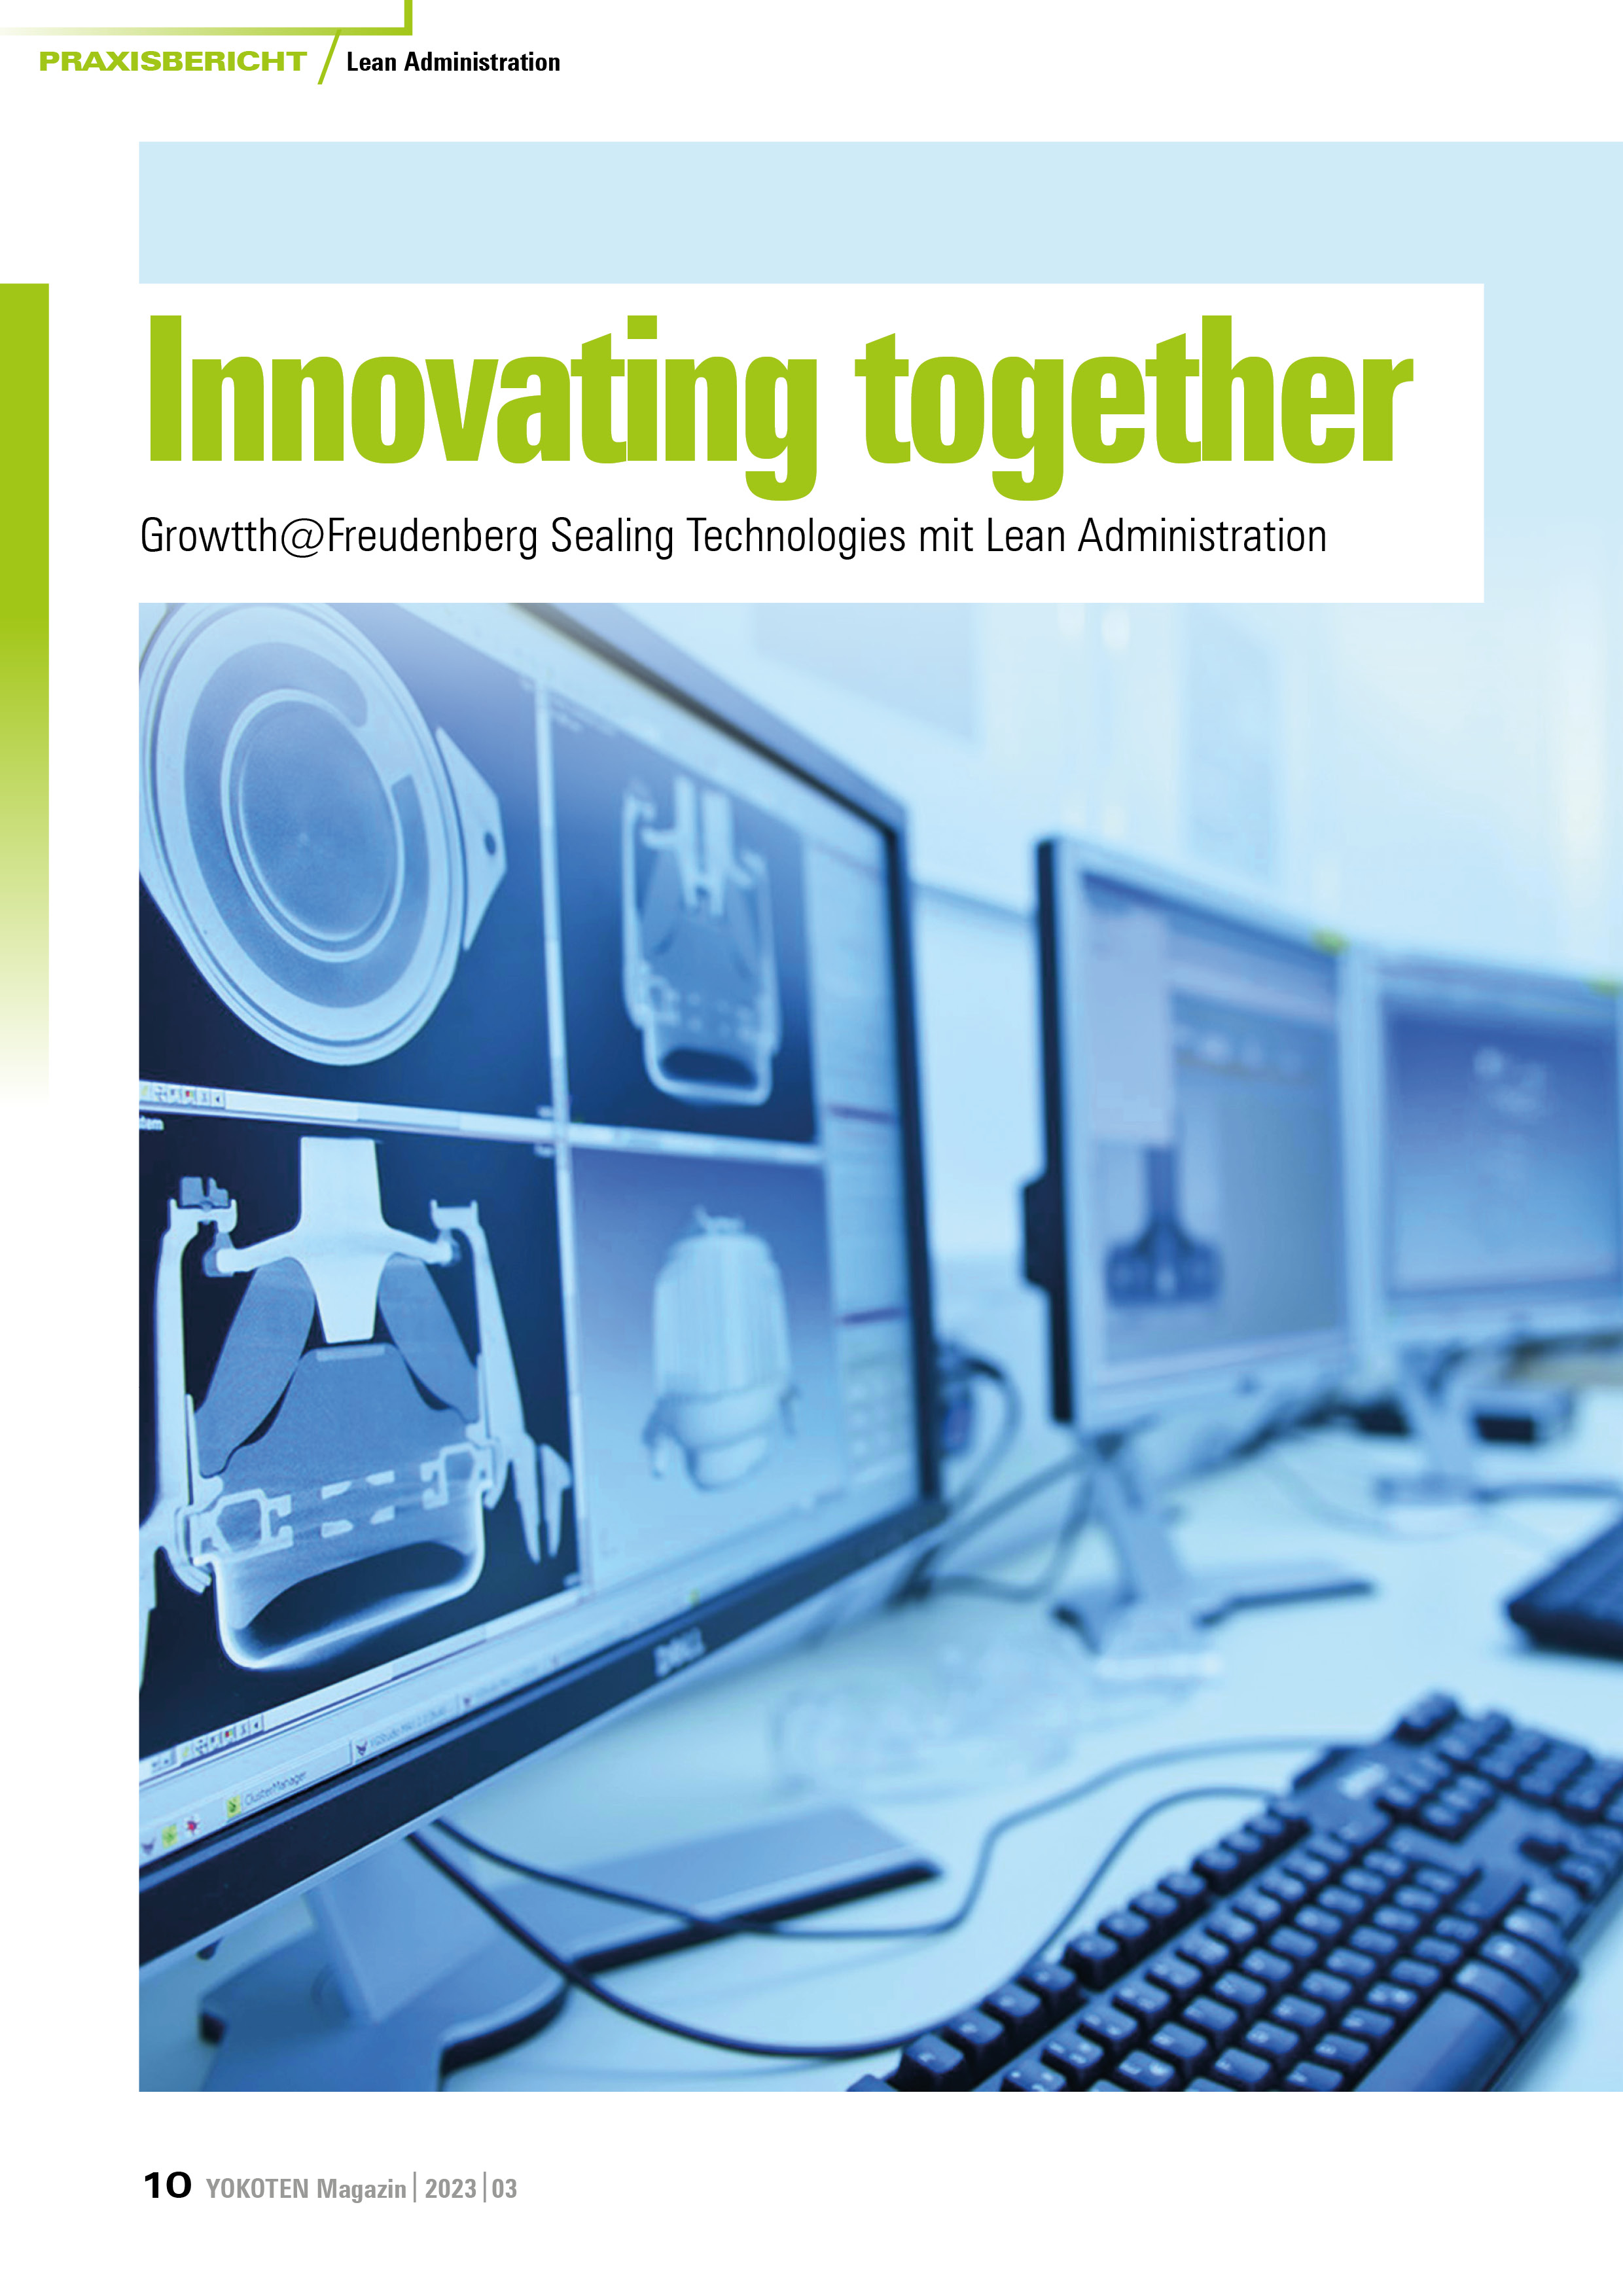 YOKOTEN-Artikel: Innovating together - Lean Administration